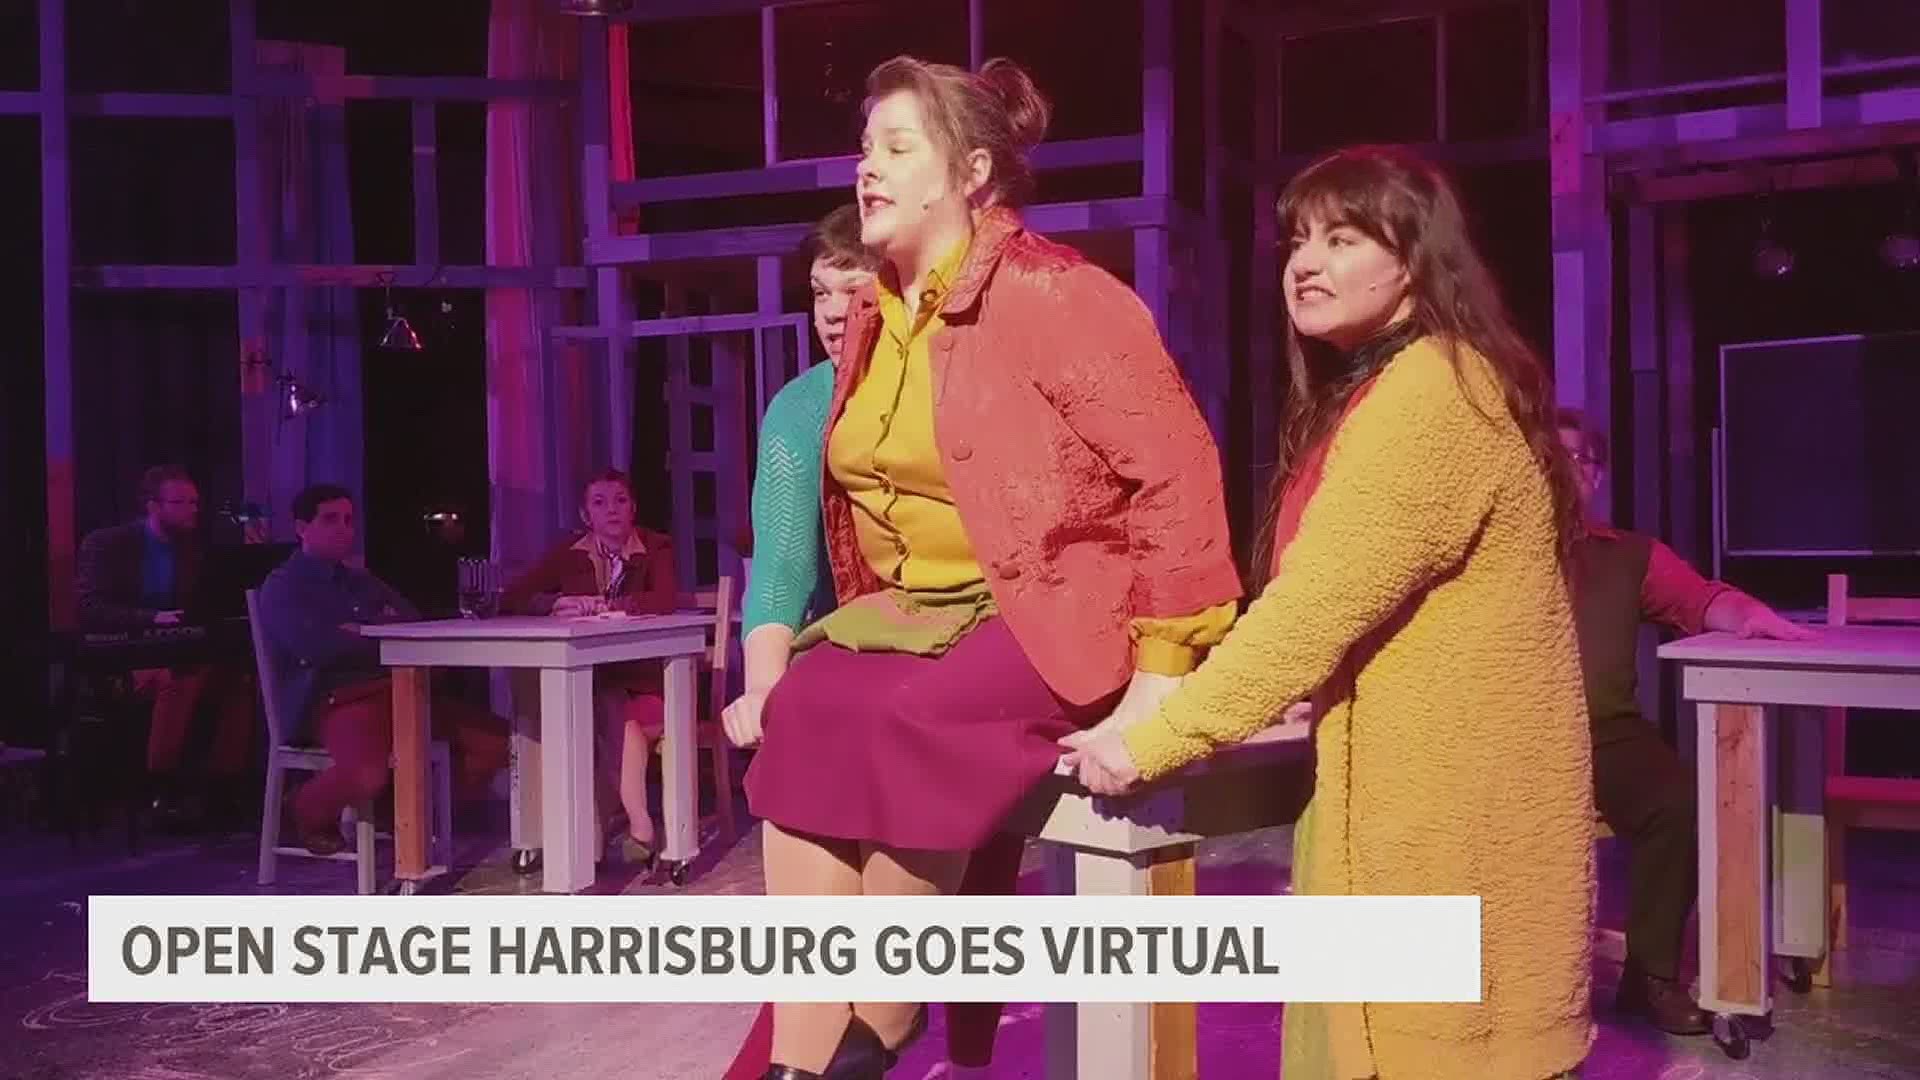 One Stage Harrisburg Goes Virtual